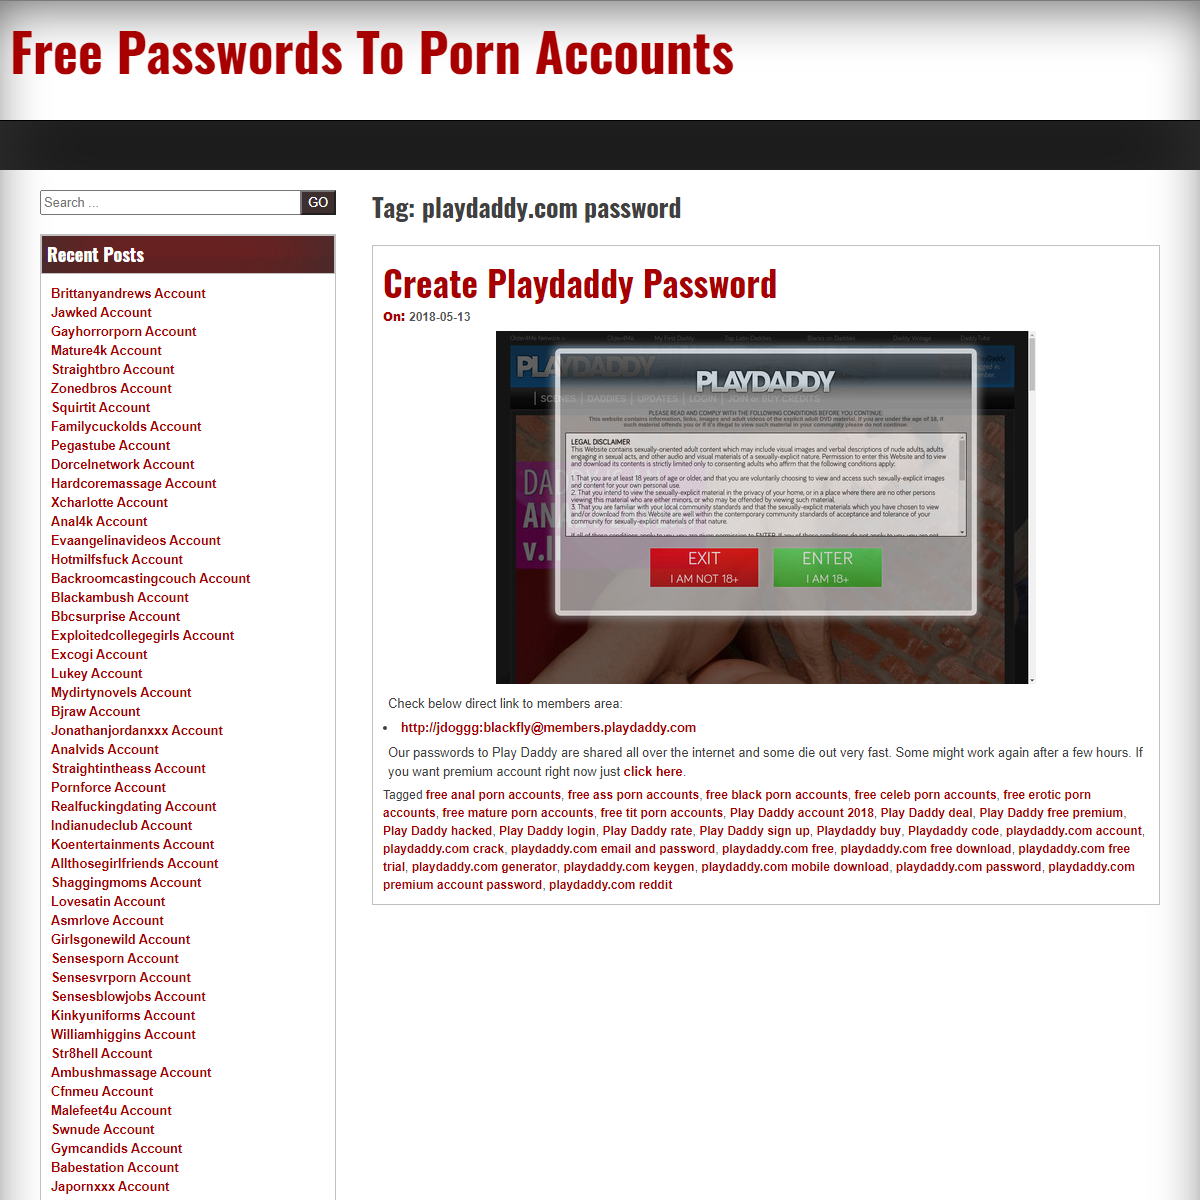 playdaddy.com password â€“ Free Passwords To Porn Accounts